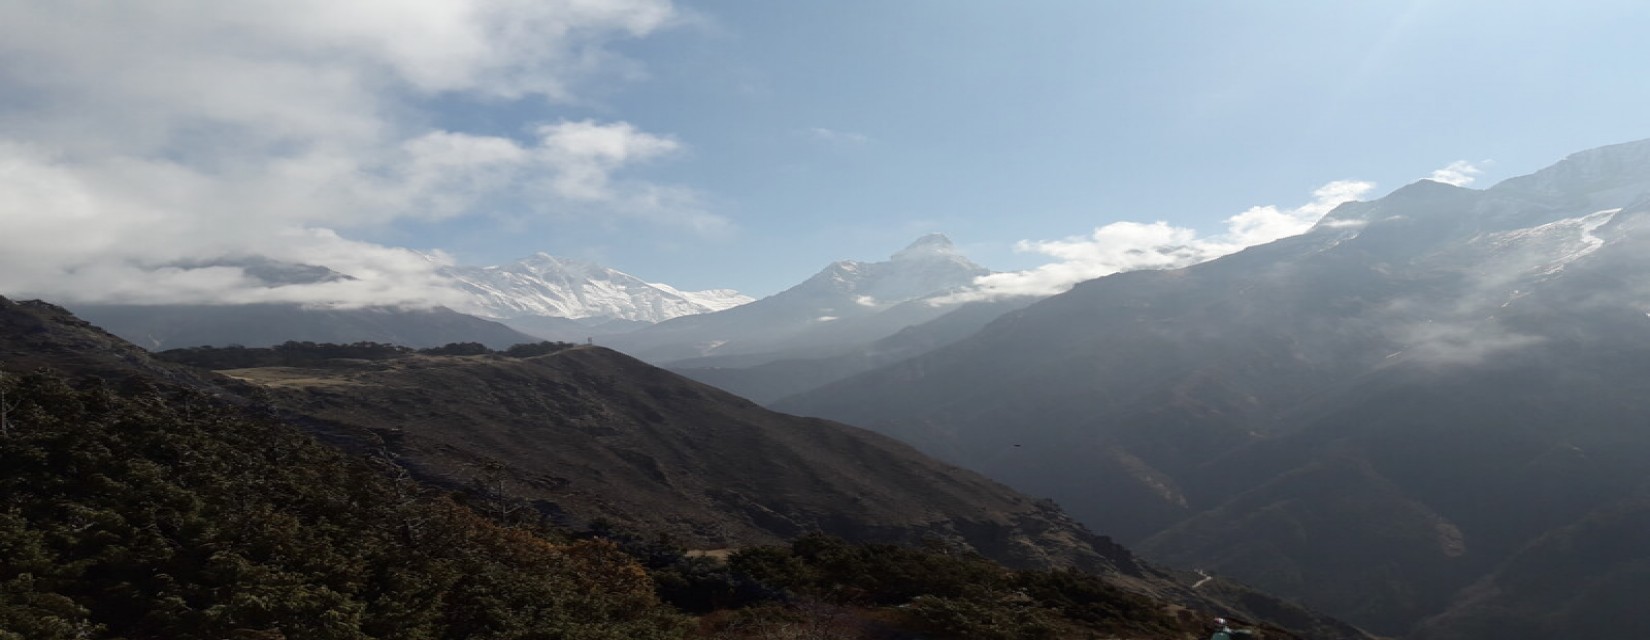 Everest Trekking - Trekking packages in Nepal